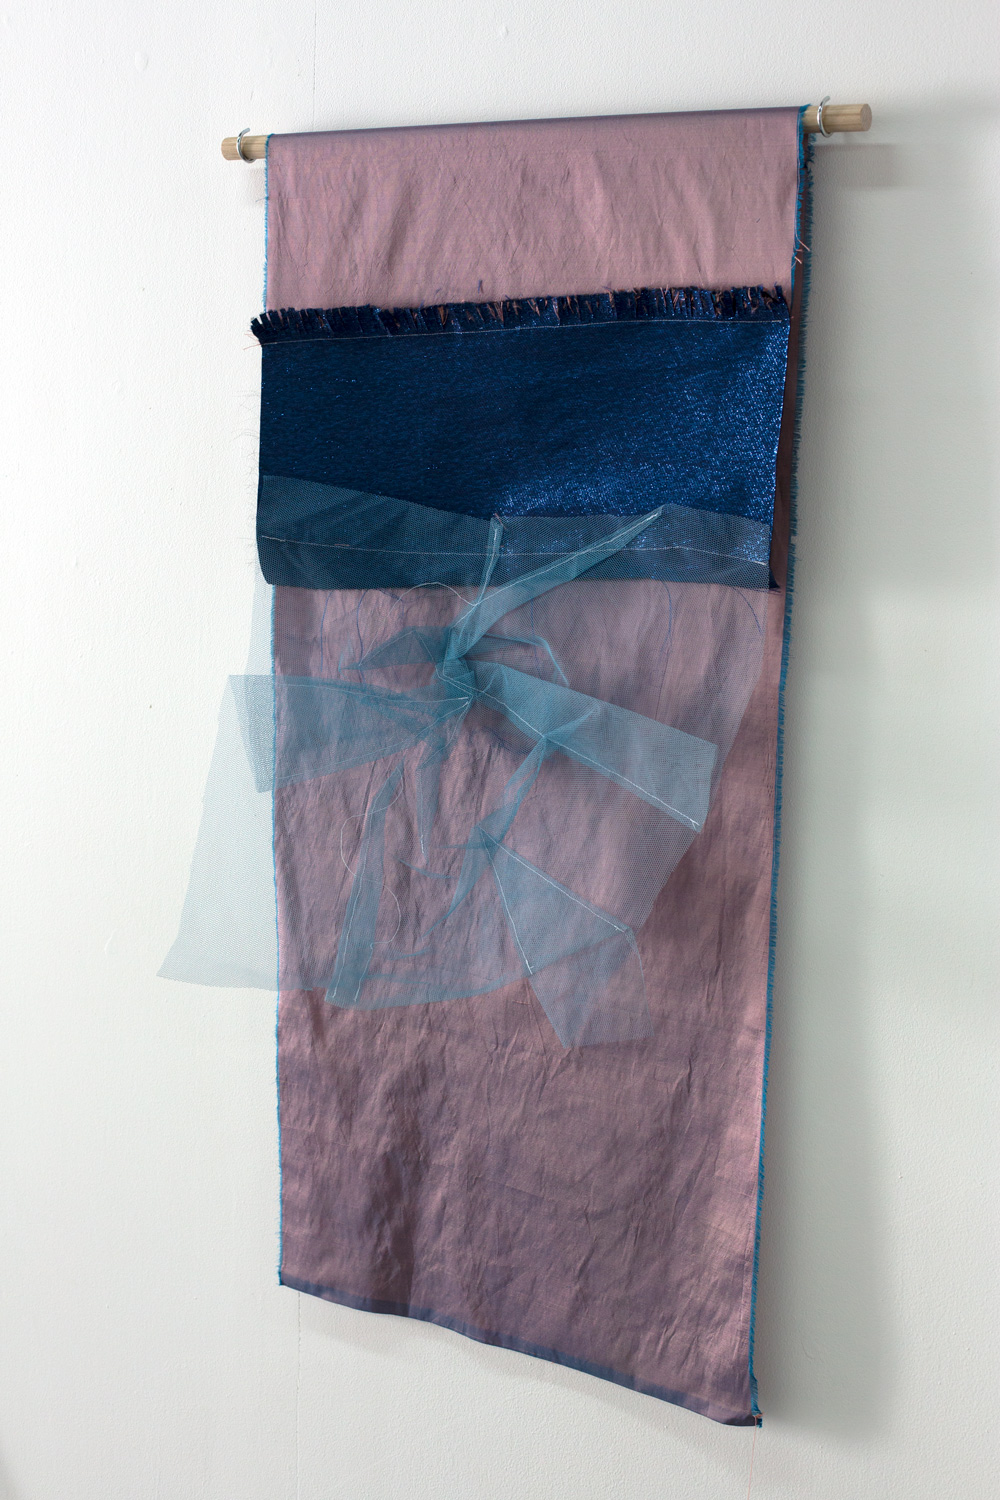   In the bed sheets , 2019, silk, polyester, tulle, thread, Tasmanian oak dowel, cup hooks, 100 x 58cm  Photo: Xavier Burrow 